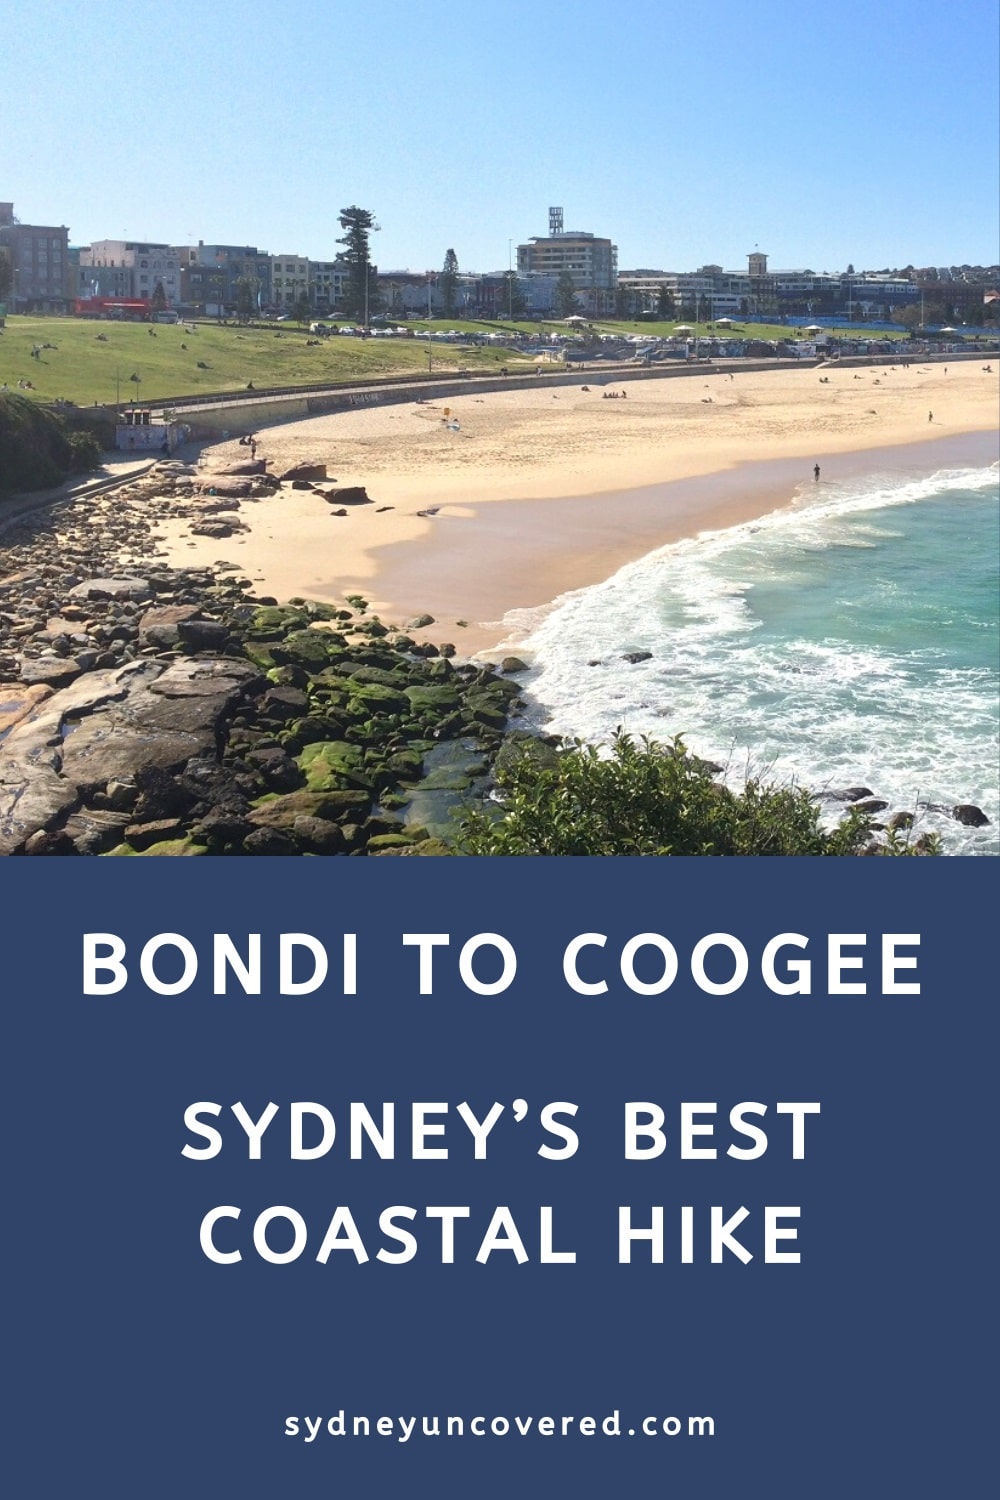 Bondi to Coogee coastal walk